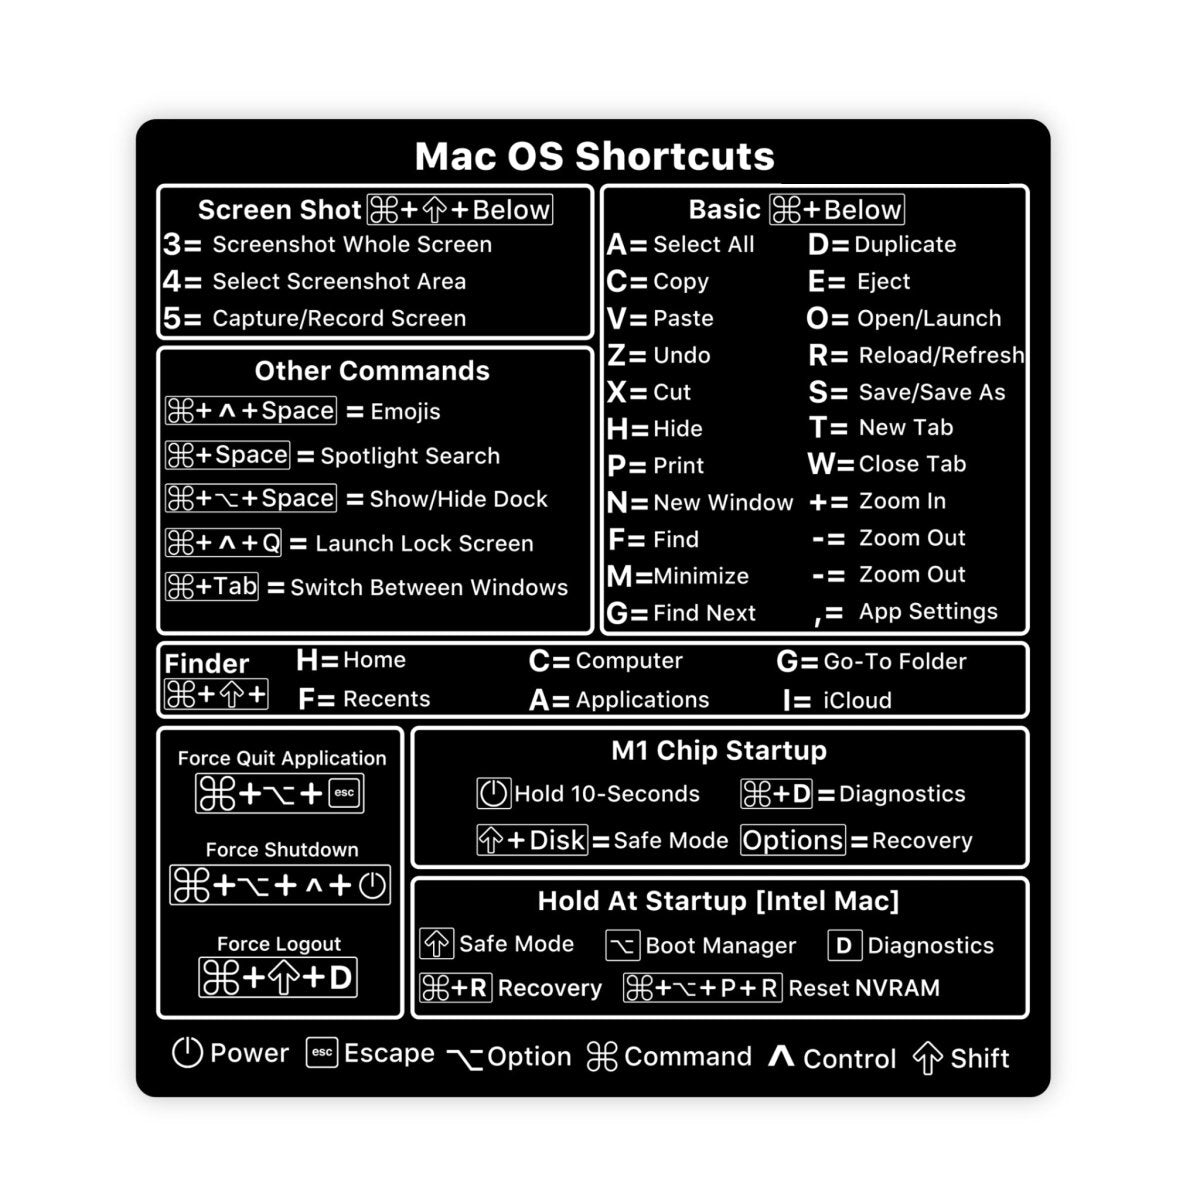 [M1/M2/Intel] White Mac OS Shortcut Sticker [Works With All Mac Laptops] - stickerbull[M1/M2/Intel] White Mac OS Shortcut Sticker [Works With All Mac Laptops]Retail StickerstickerbullstickerbullTaylor_BlackMac [#77]Black[M1/M2/Intel] White Mac OS Shortcut Sticker [Works With All Mac Laptops]